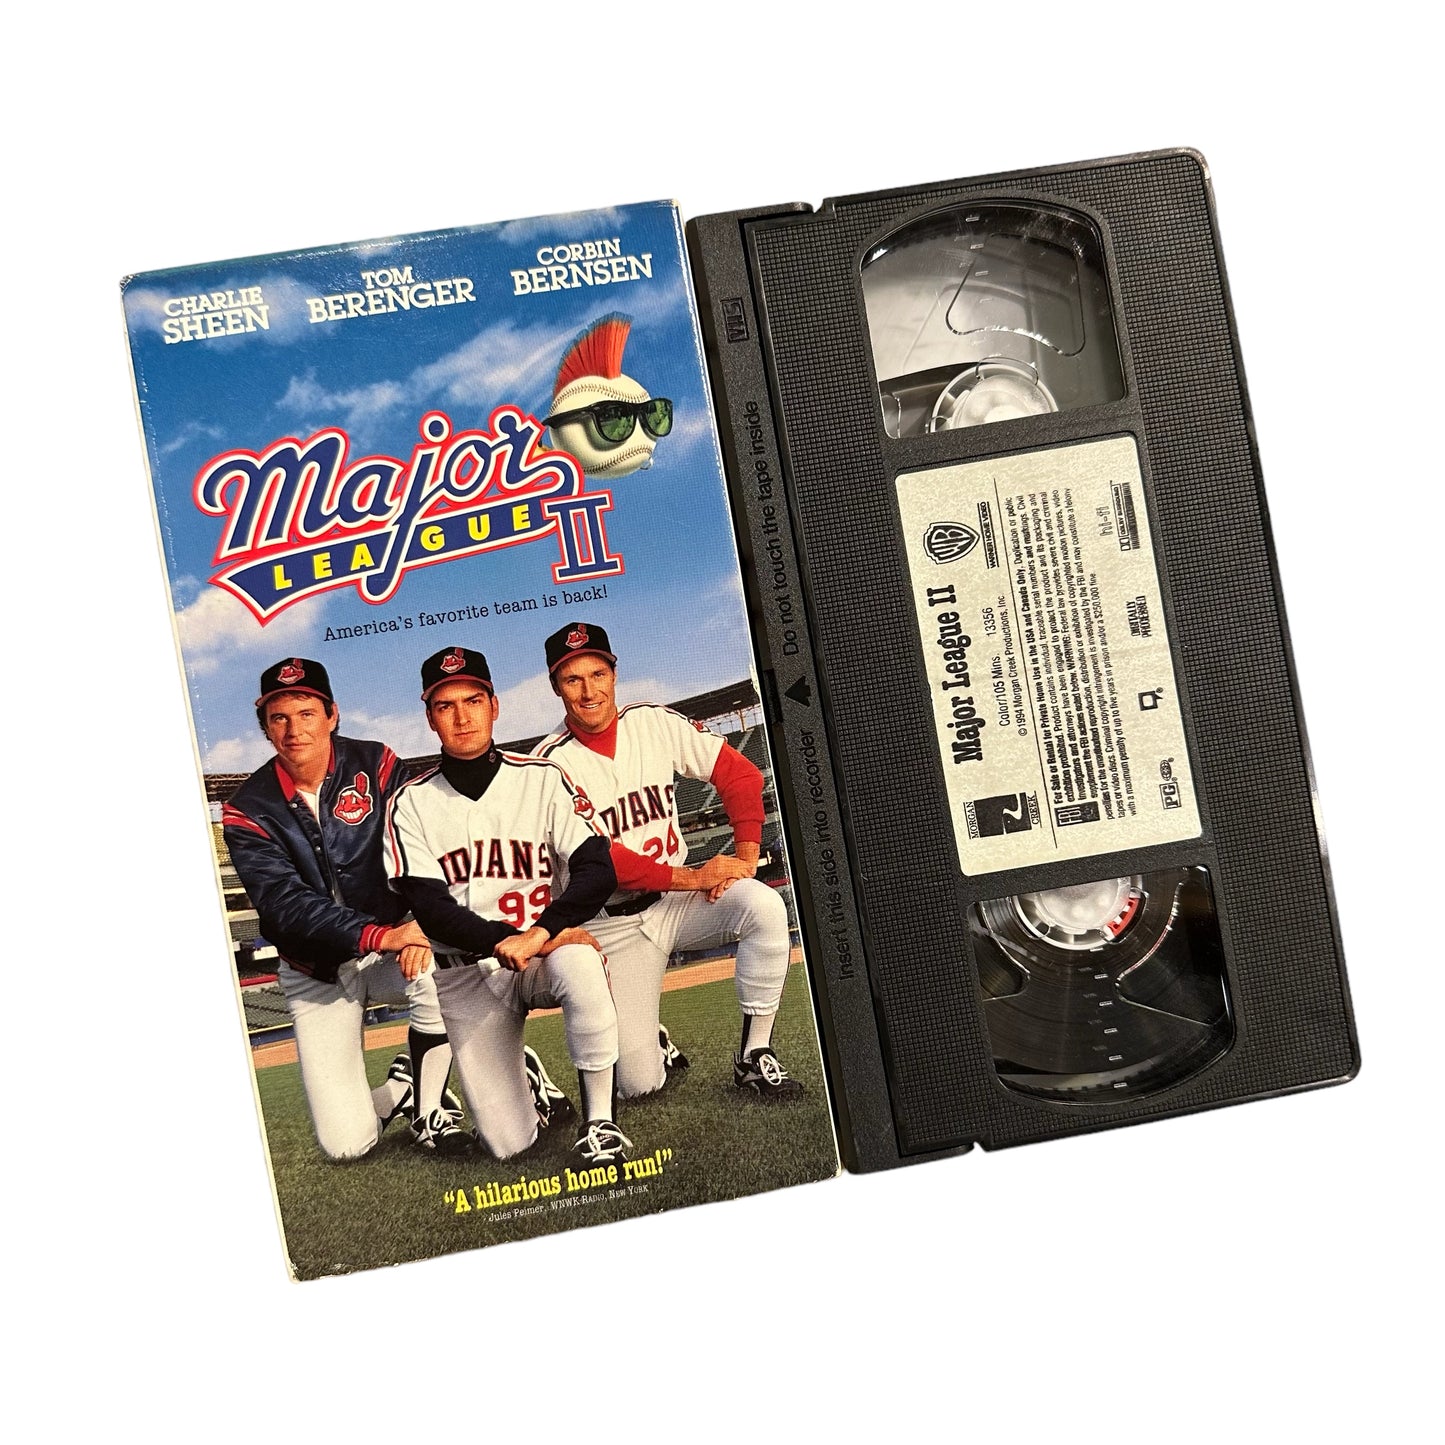 VHS ビデオテープ 輸入版 メジャーリーグ2 Major LeagueⅡ 海外版 USA アメリカ ヴィンテージ ビデオ 紙ジャケ